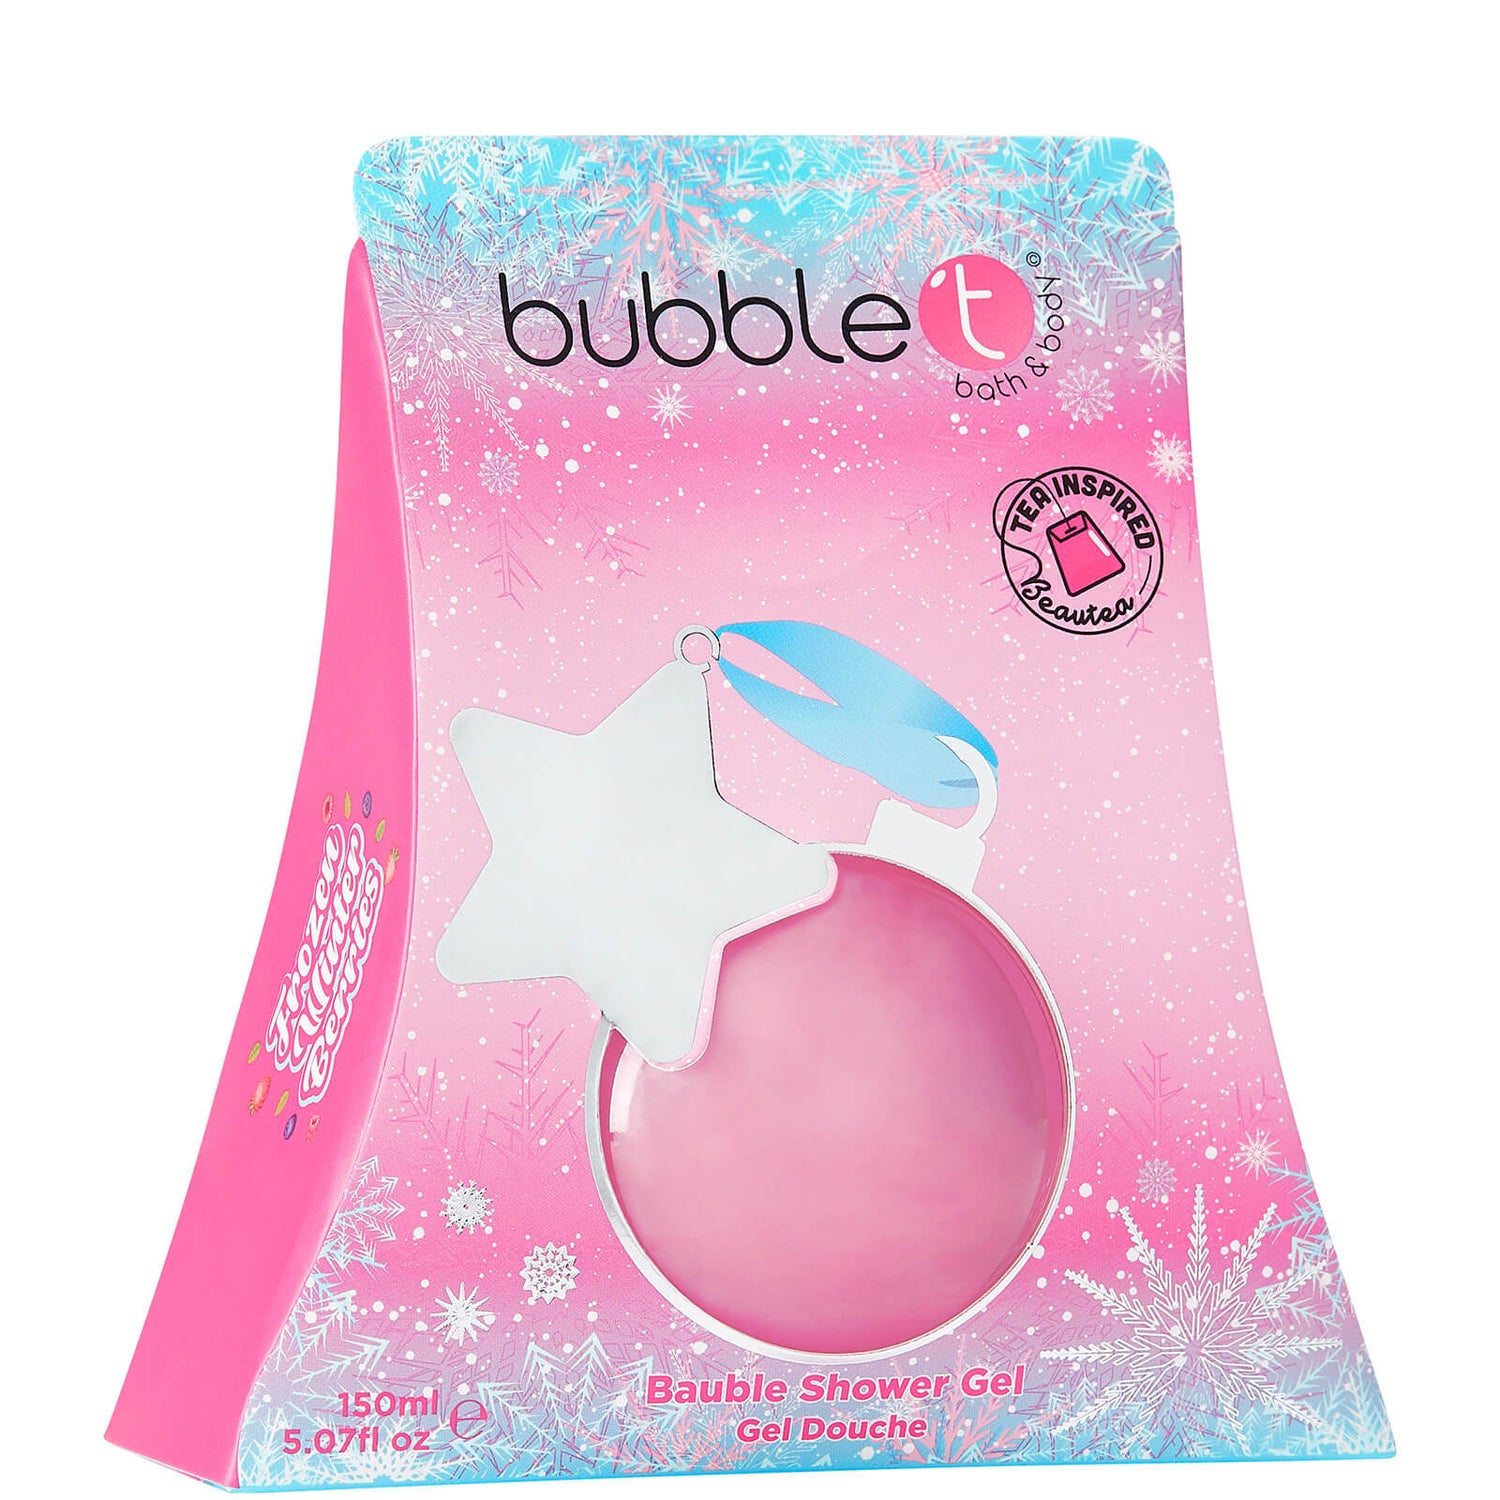 Bubble T Cosmetics Frozen Winter Berries bad- og brusebad-bugle